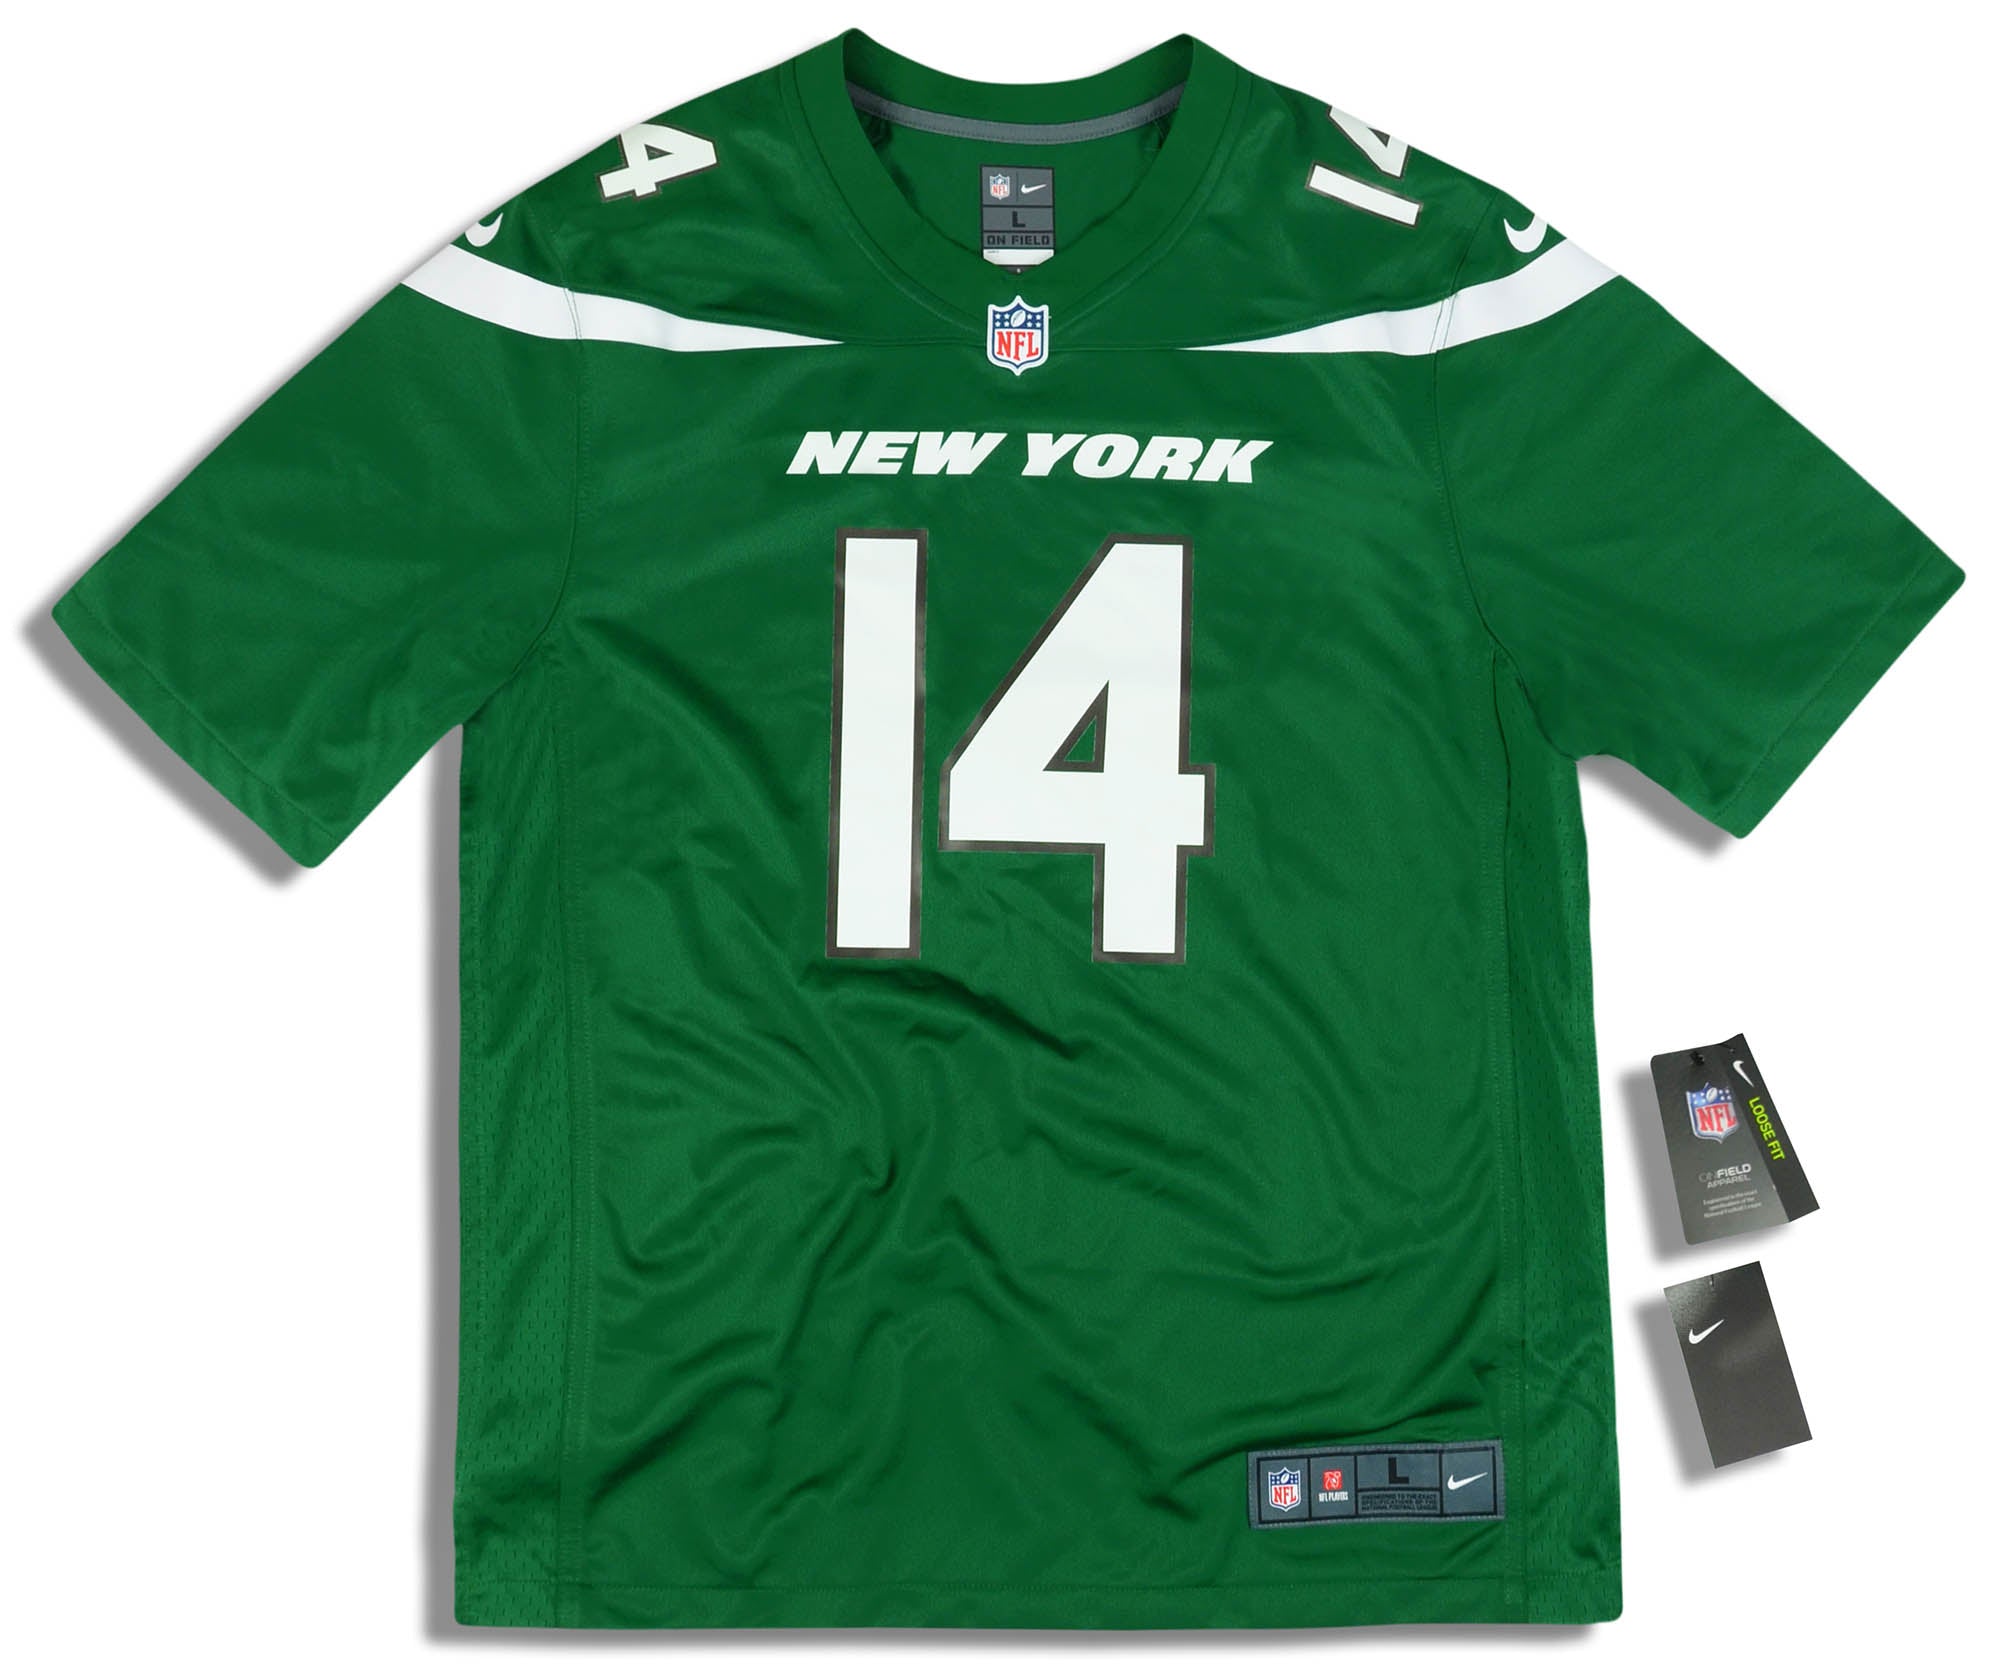 Brett Favre Authentic New York Jets Jersey by Reebok, Green, size